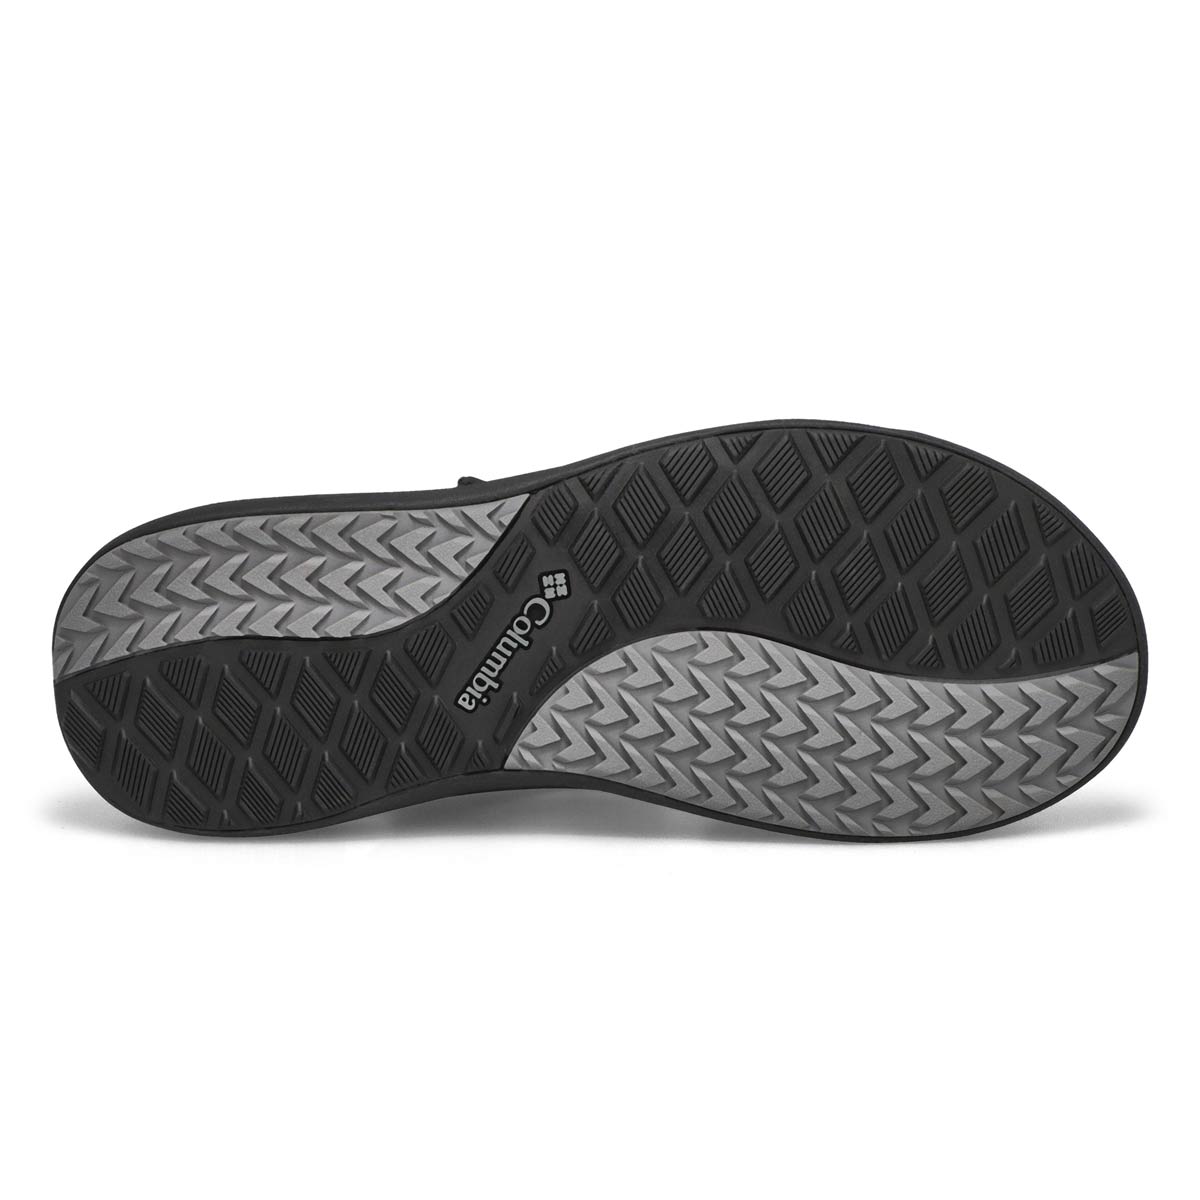 Men's Columbia Sport Sandal - Black/Grey